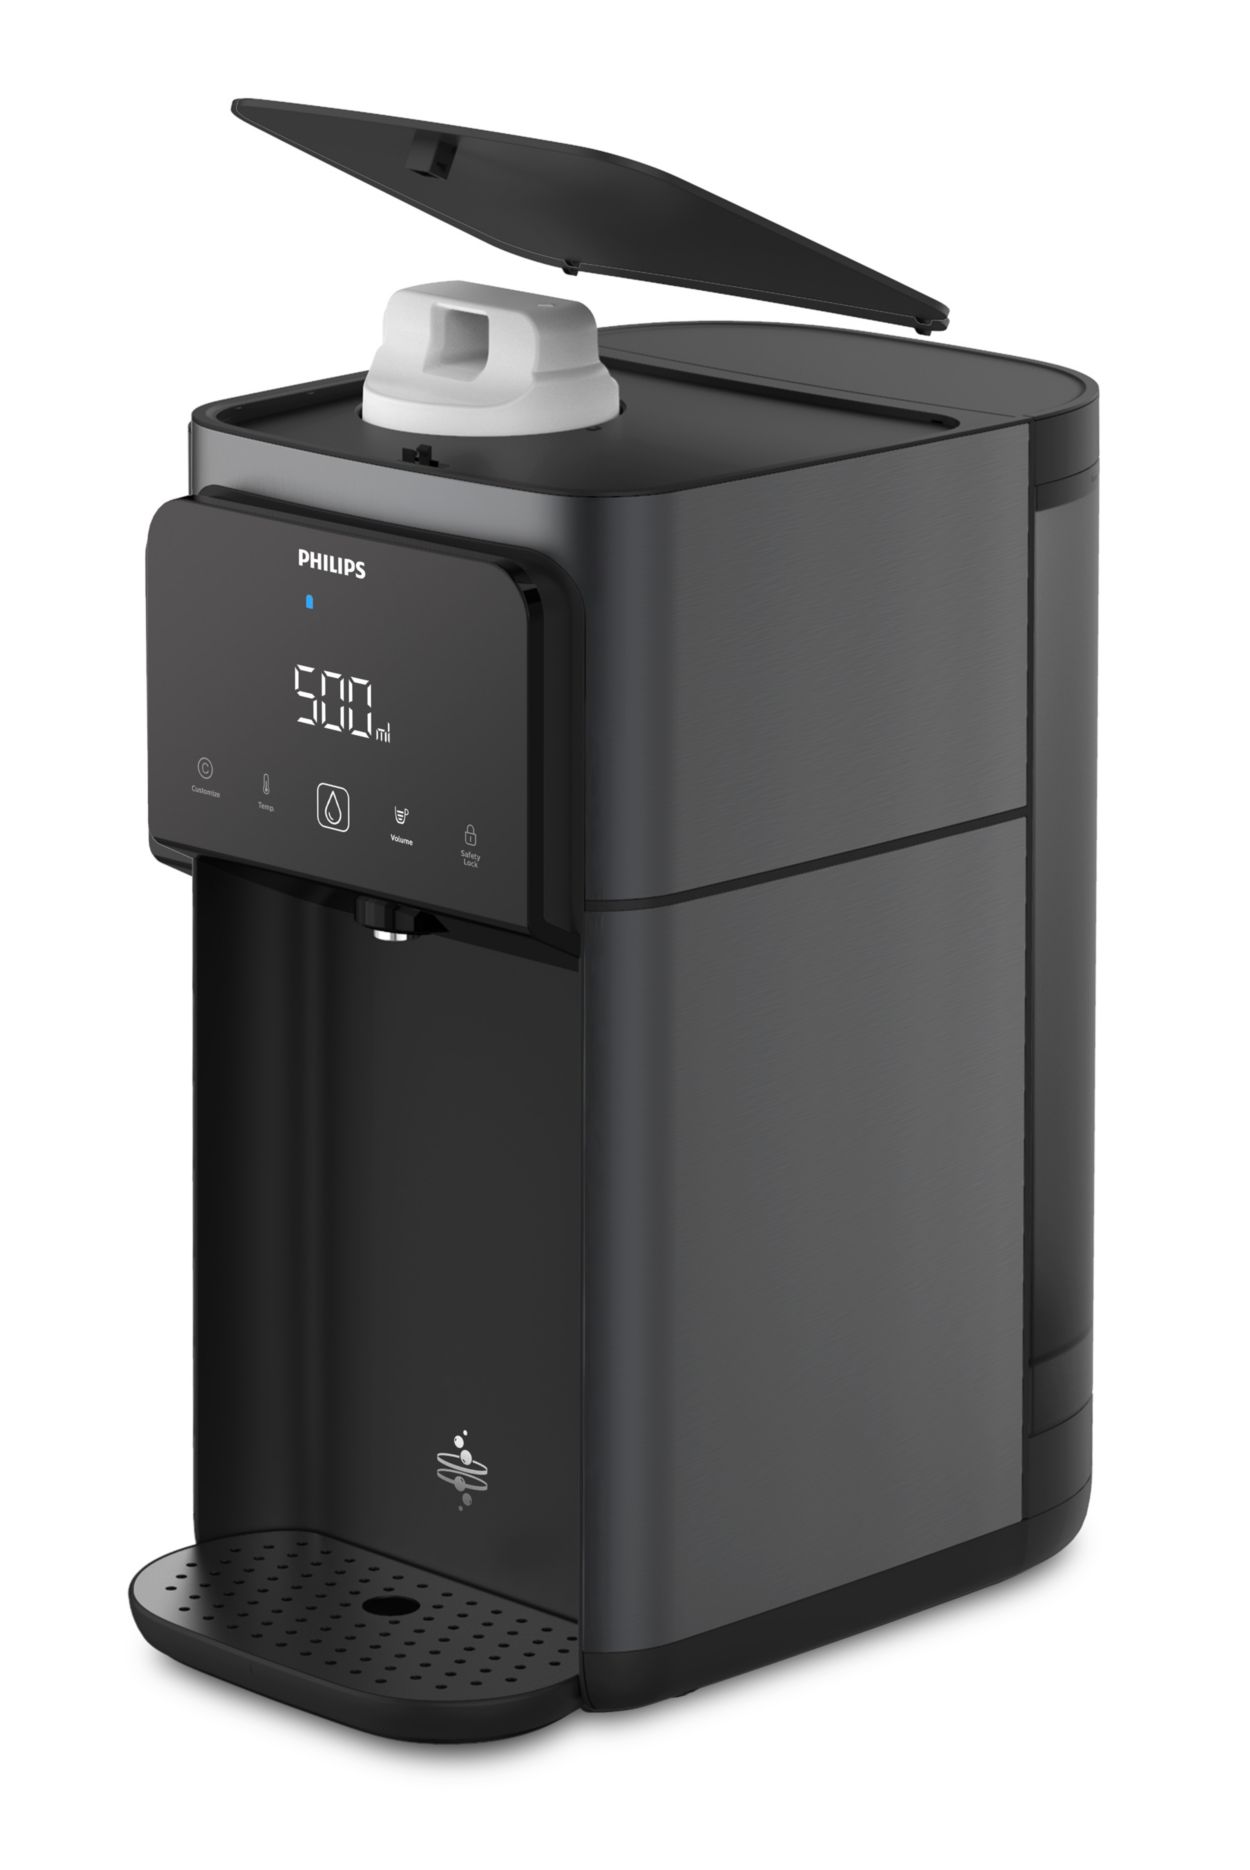 Philips RO Water Dispenser :: Behance